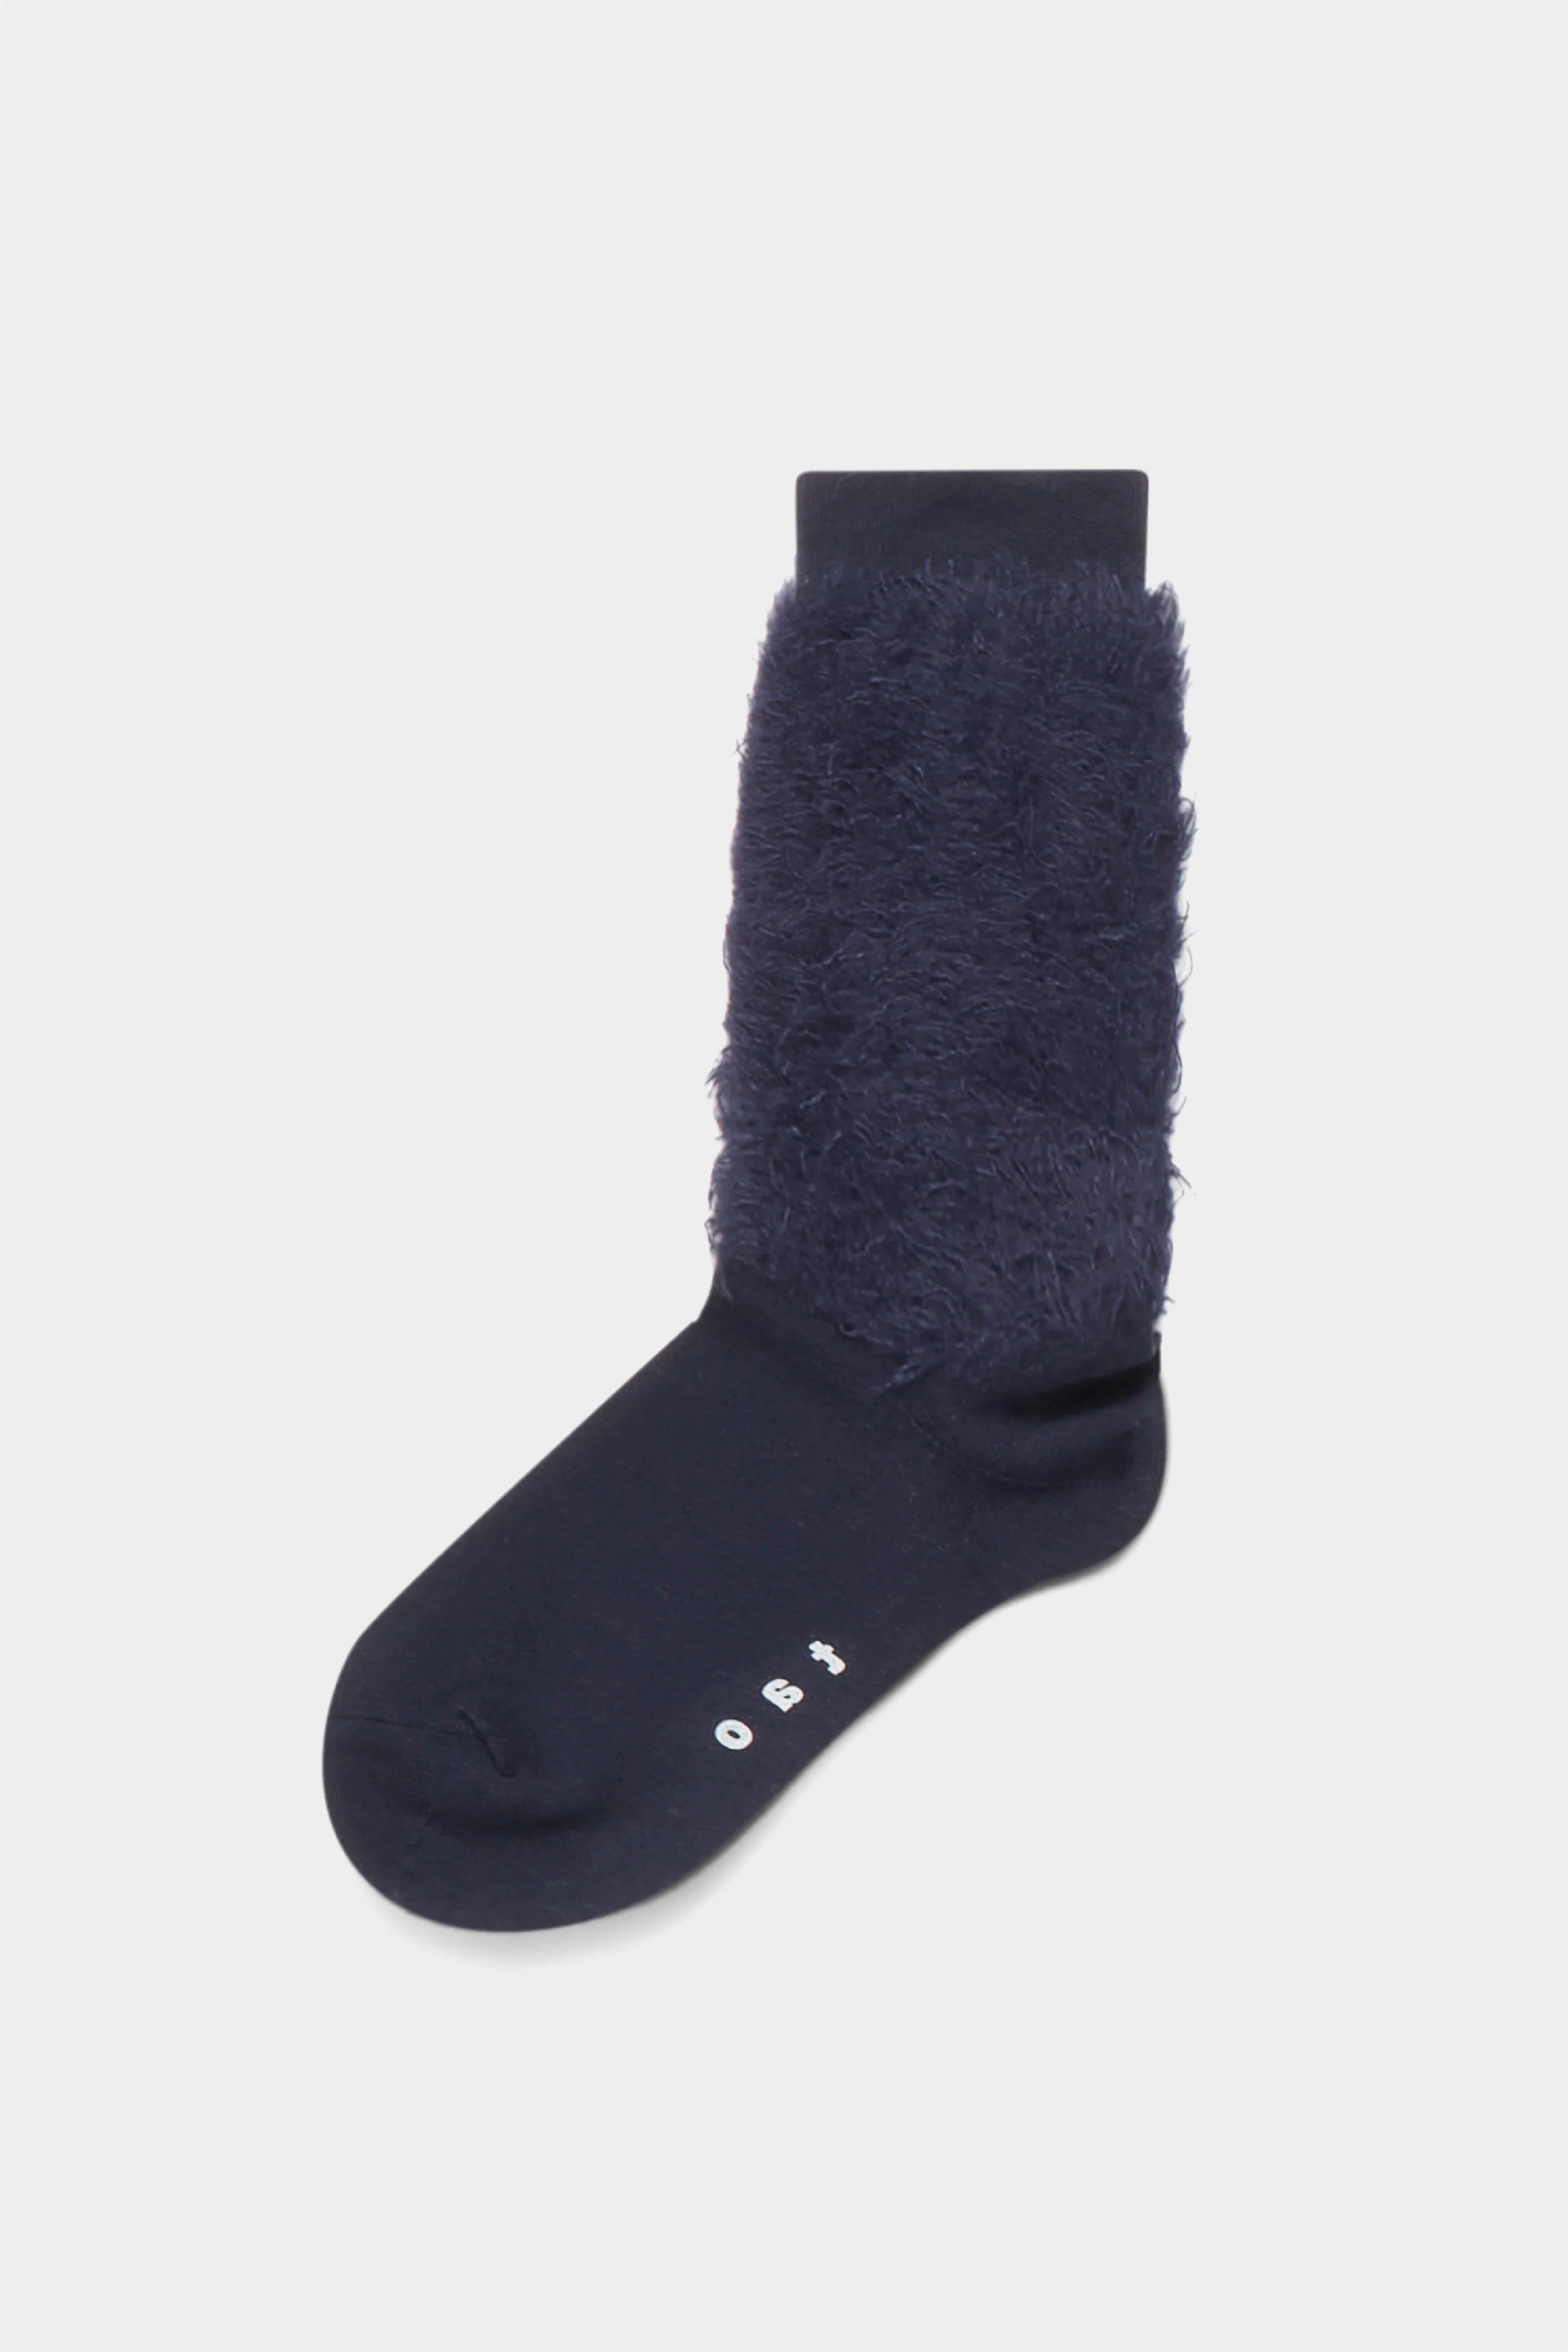 Selectshop FRAME - TAO Socks All-Accessories Concept Store Dubai